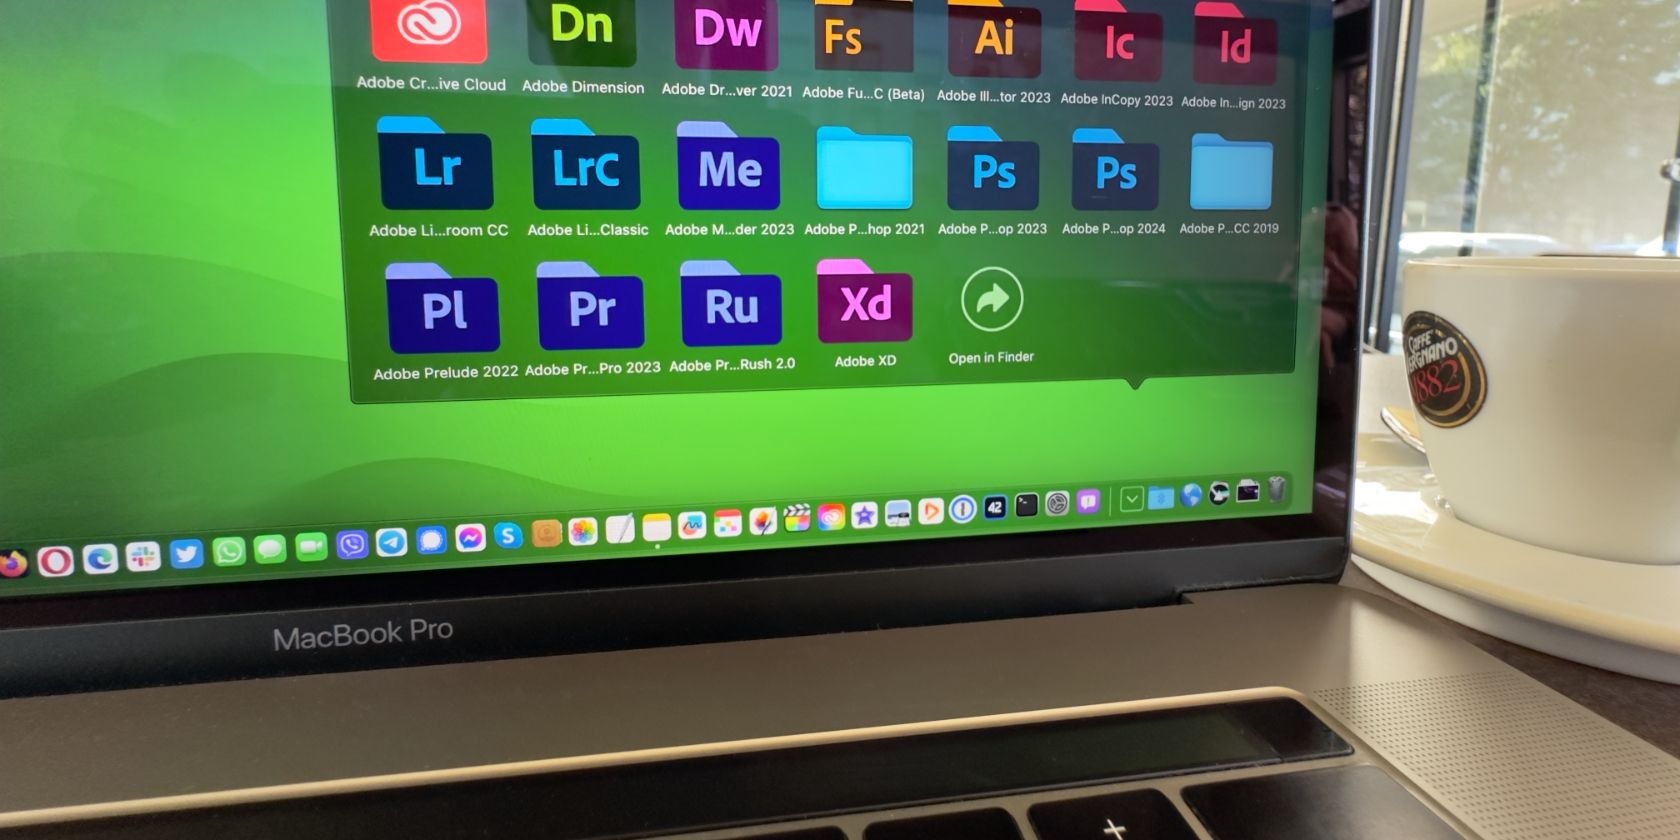 MacBook Pro showing a folder of Adobe apps in the Dock